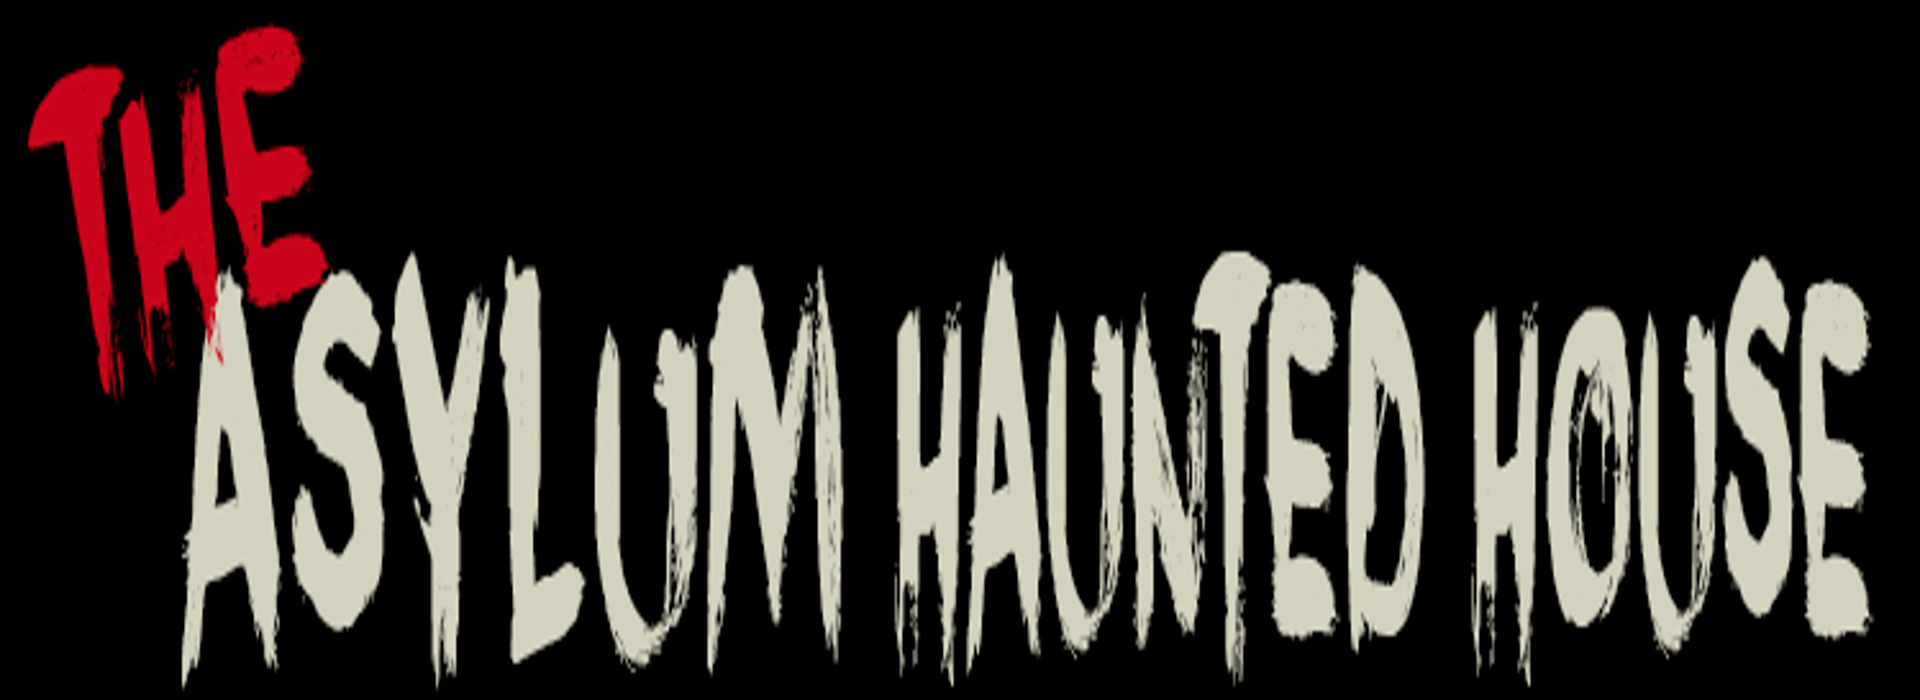 The Asylum Haunted House 